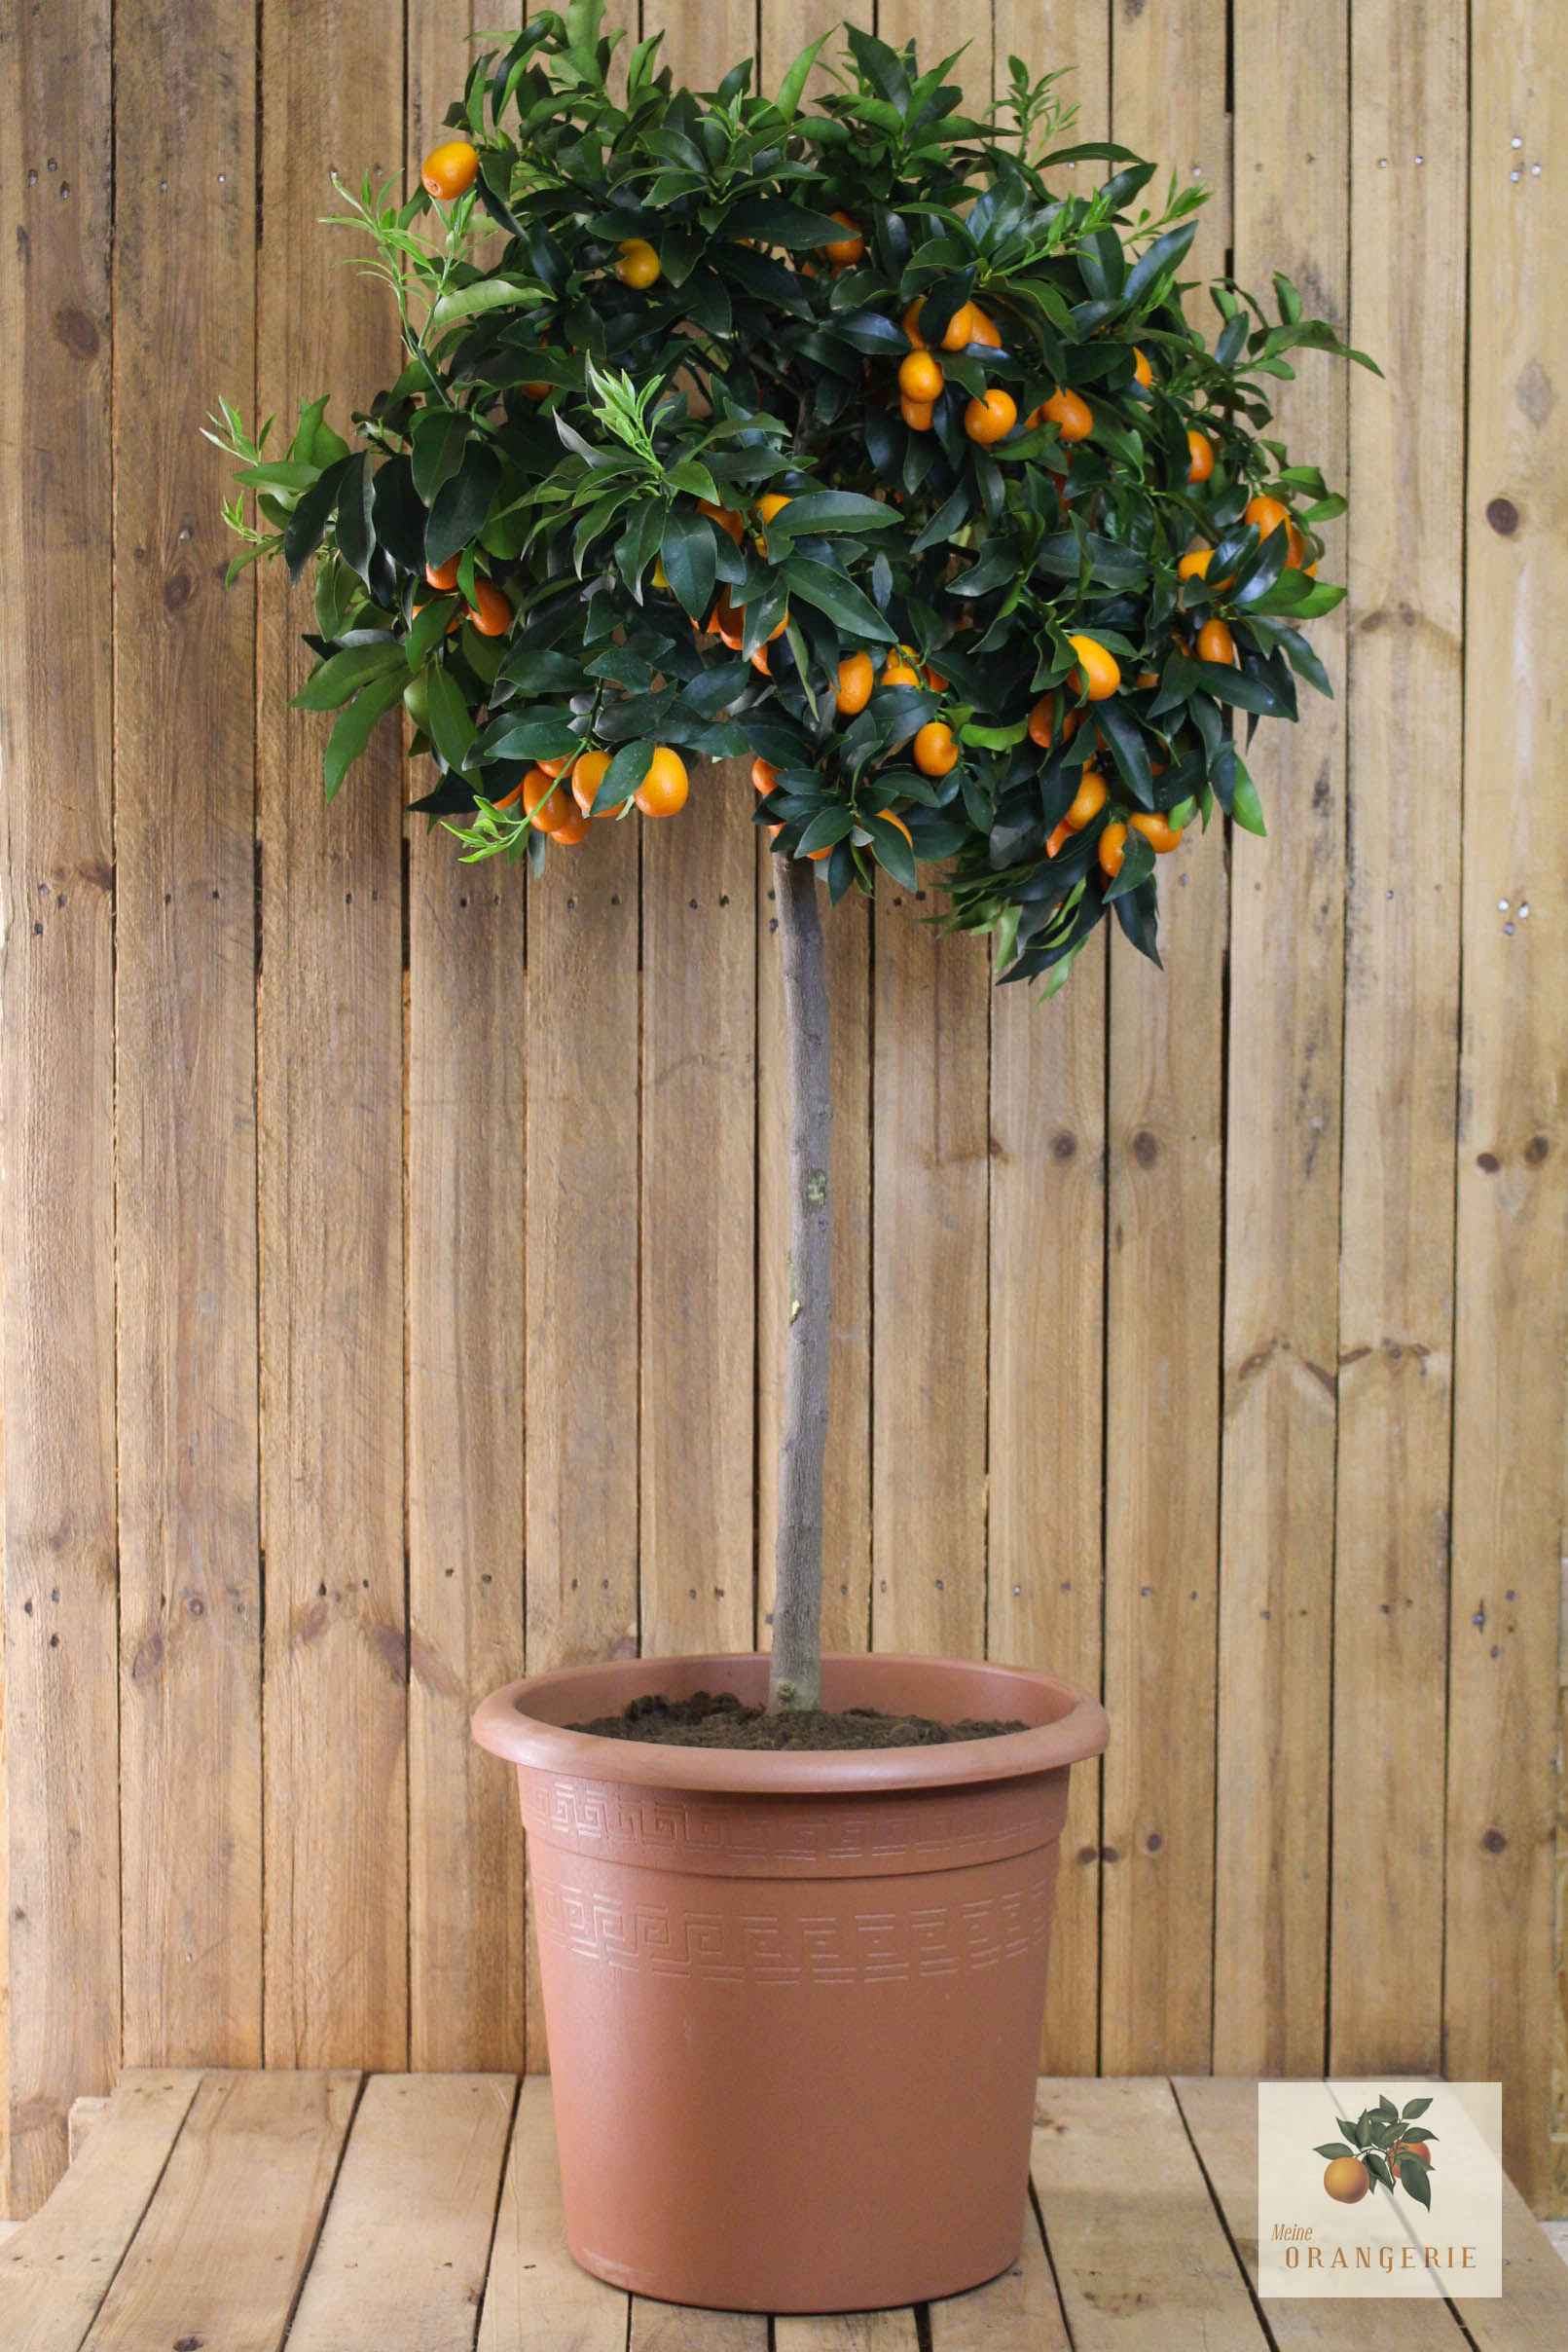 Kumquat [Molto Grande] - Citrus japonica - Fortunella